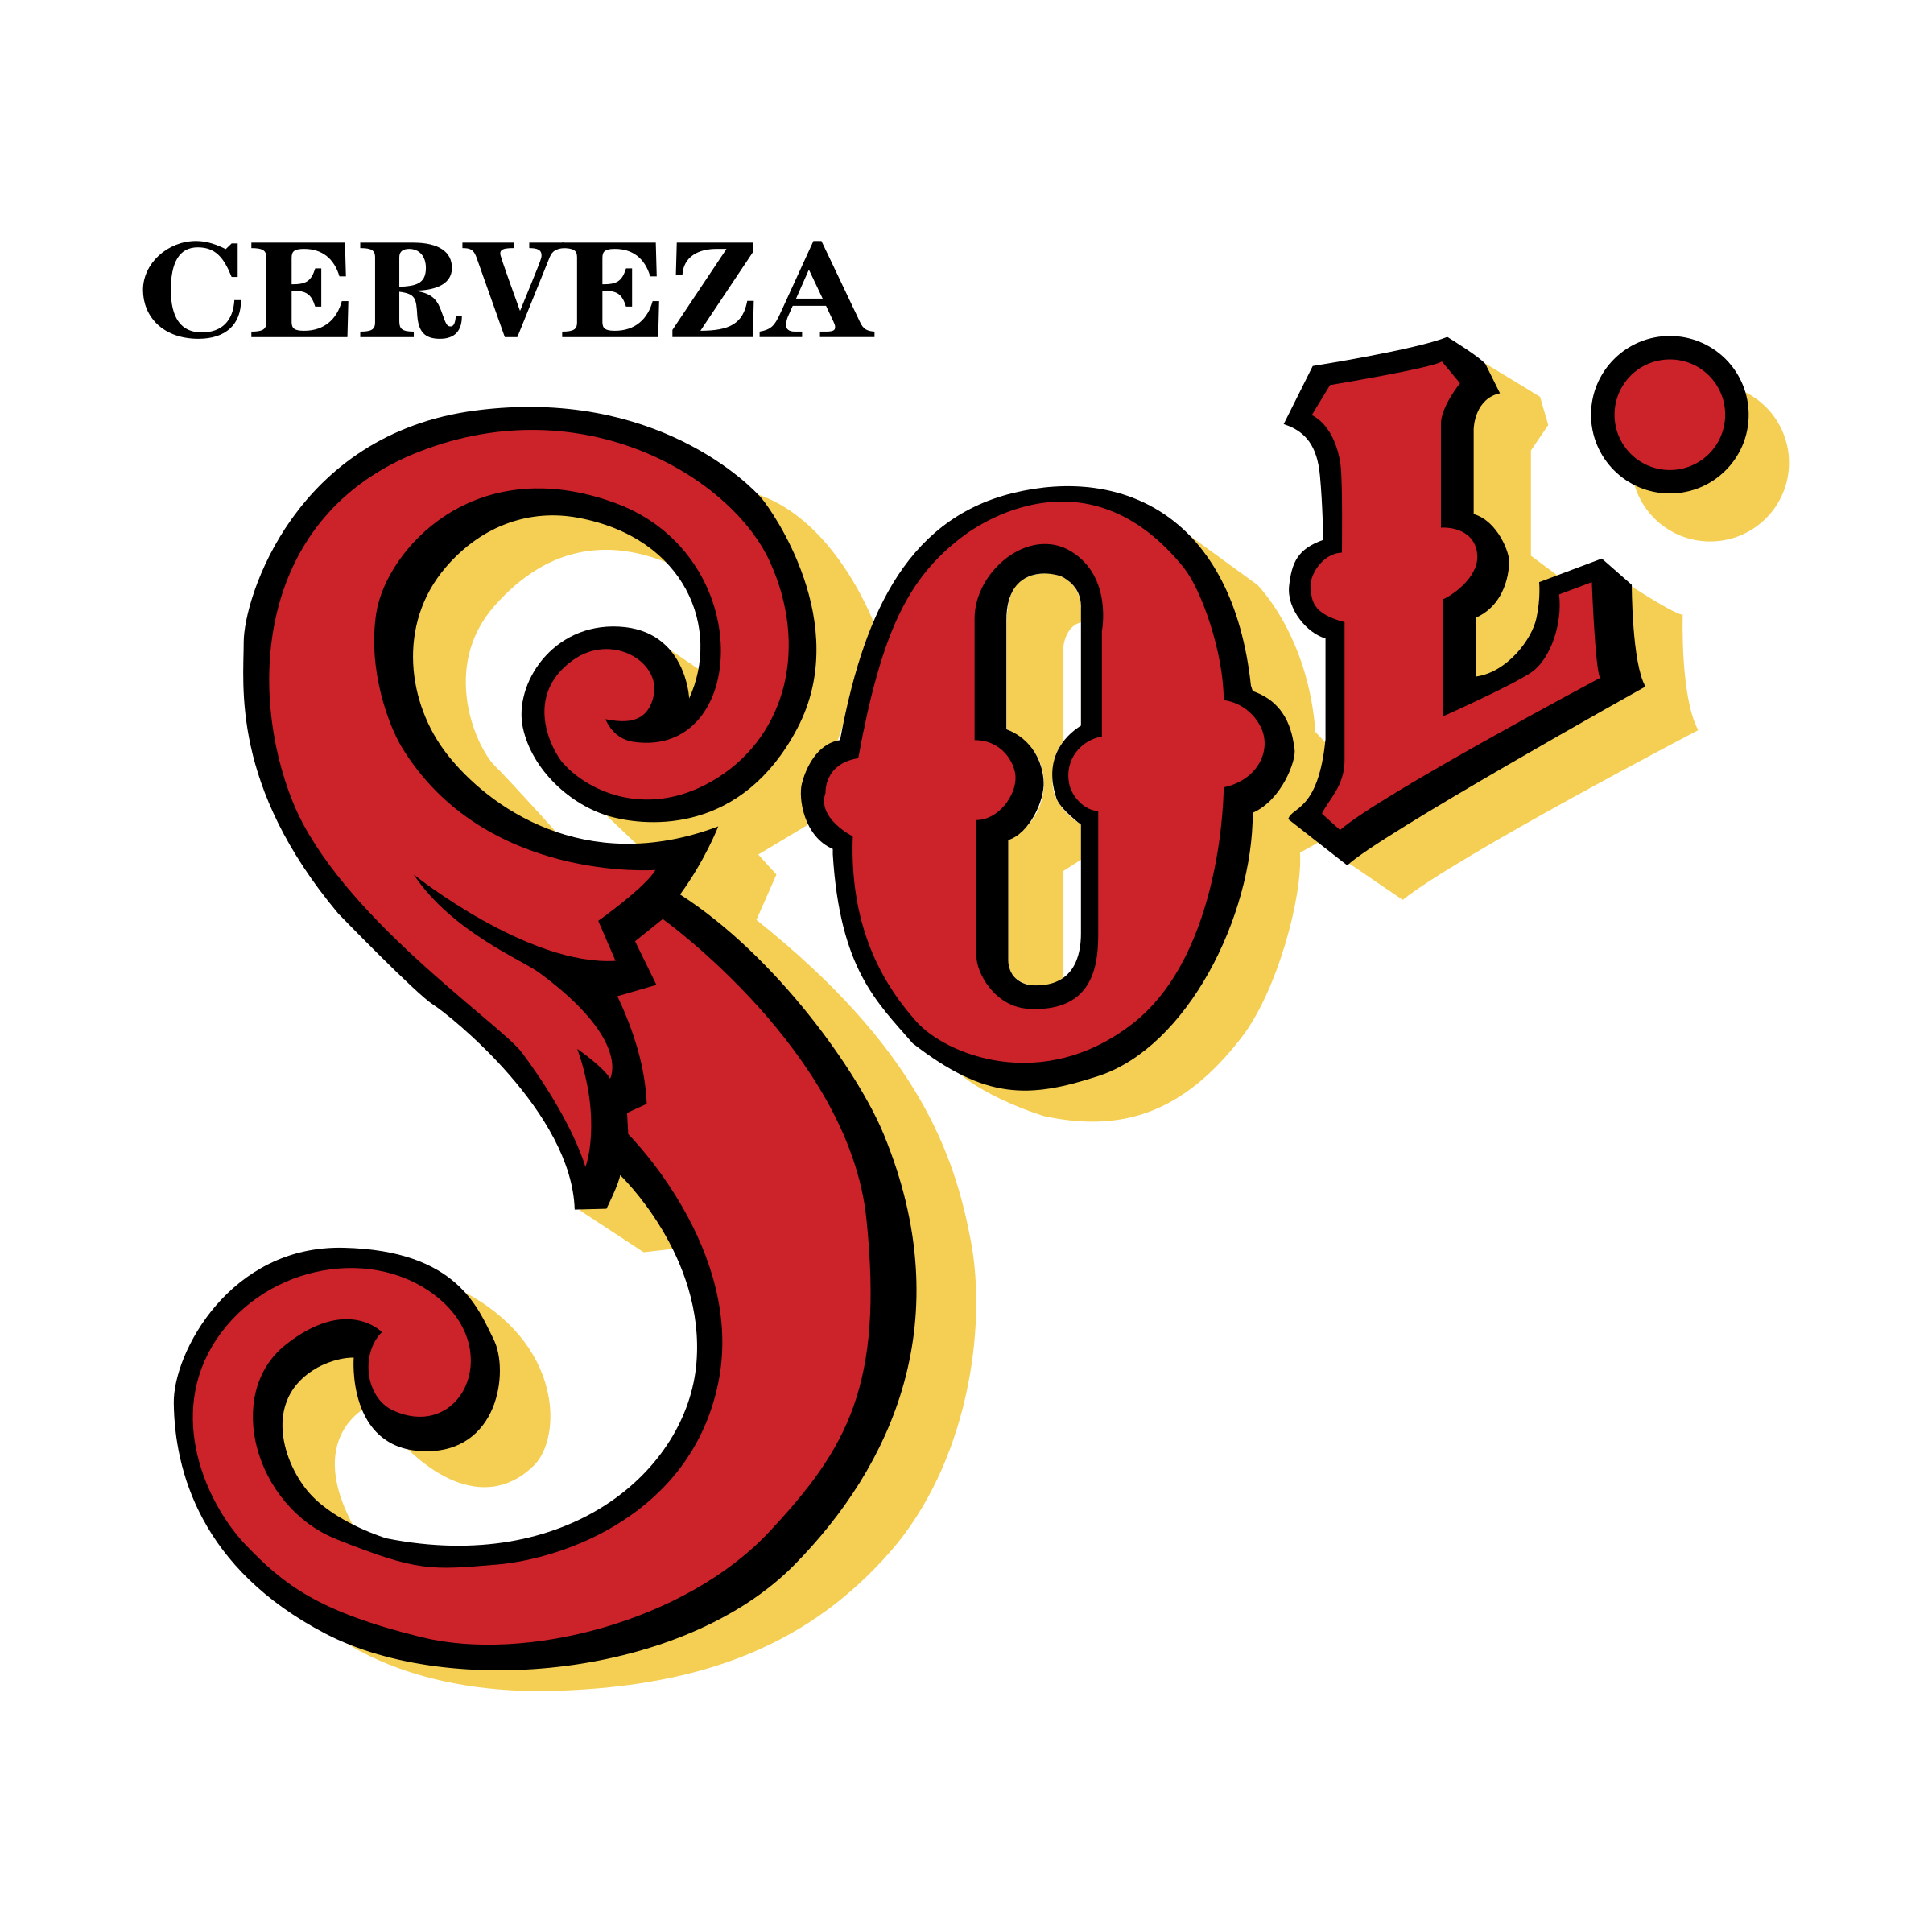 Sol Logo - Sol Logo PNG Transparent & SVG Vector - Freebie Supply